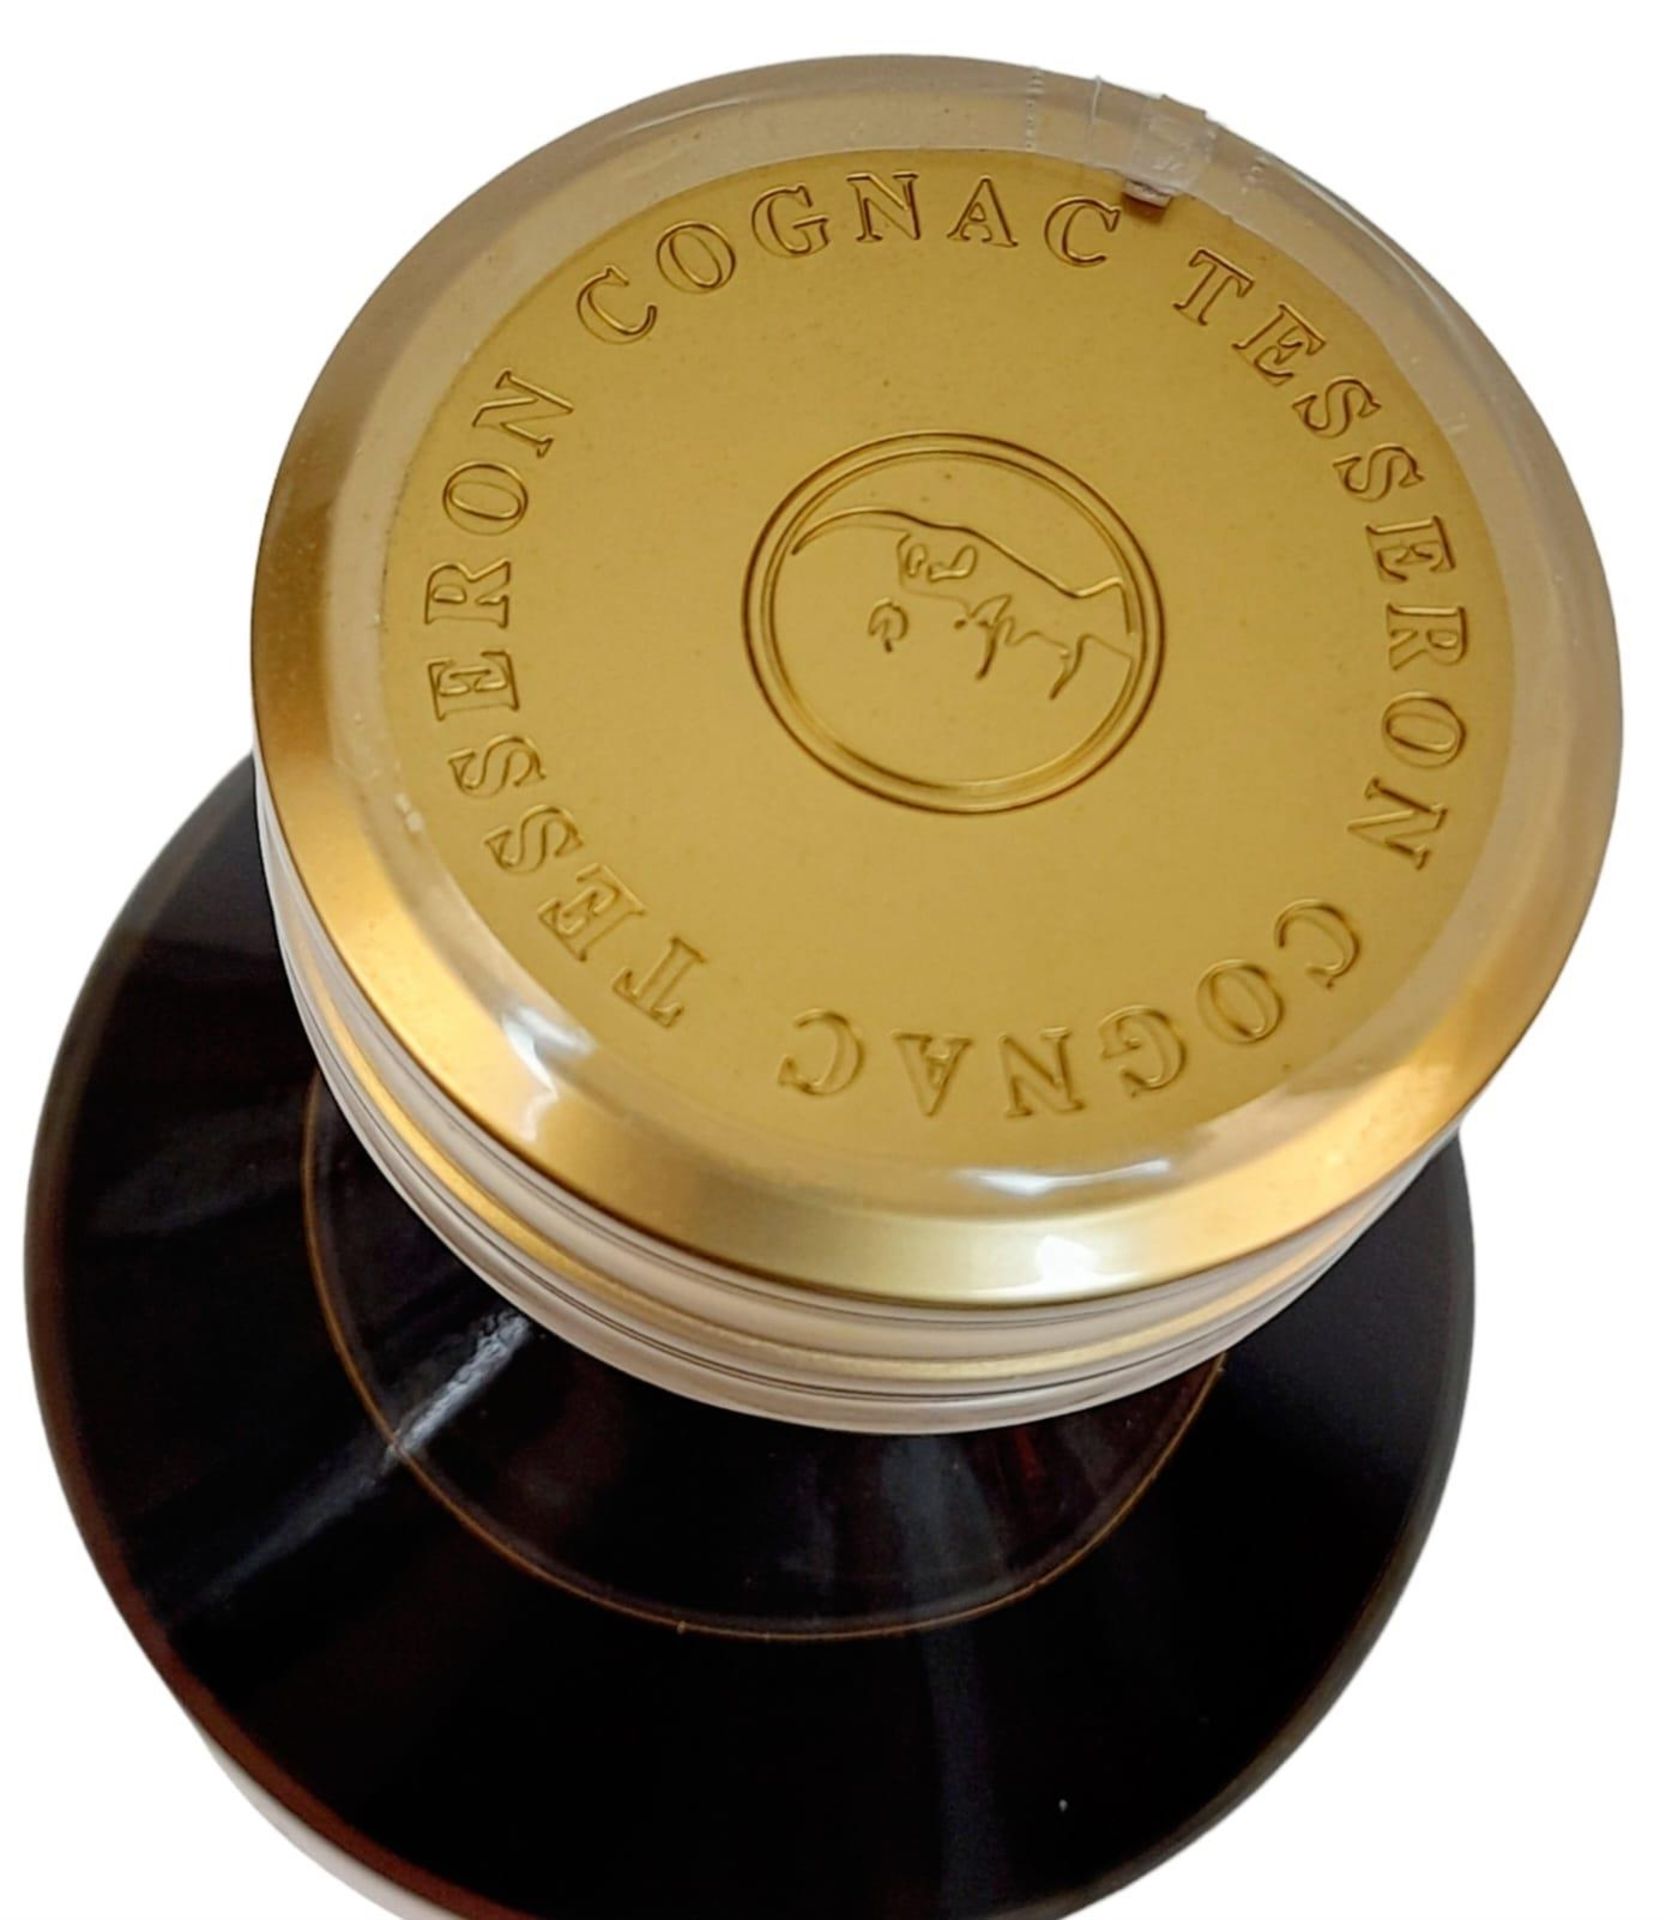 An Unopened, Sealed, Limited Edition Tesseron Cognac Lot No 76 1st Cru de Cognac XO Tradition. - Image 5 of 5